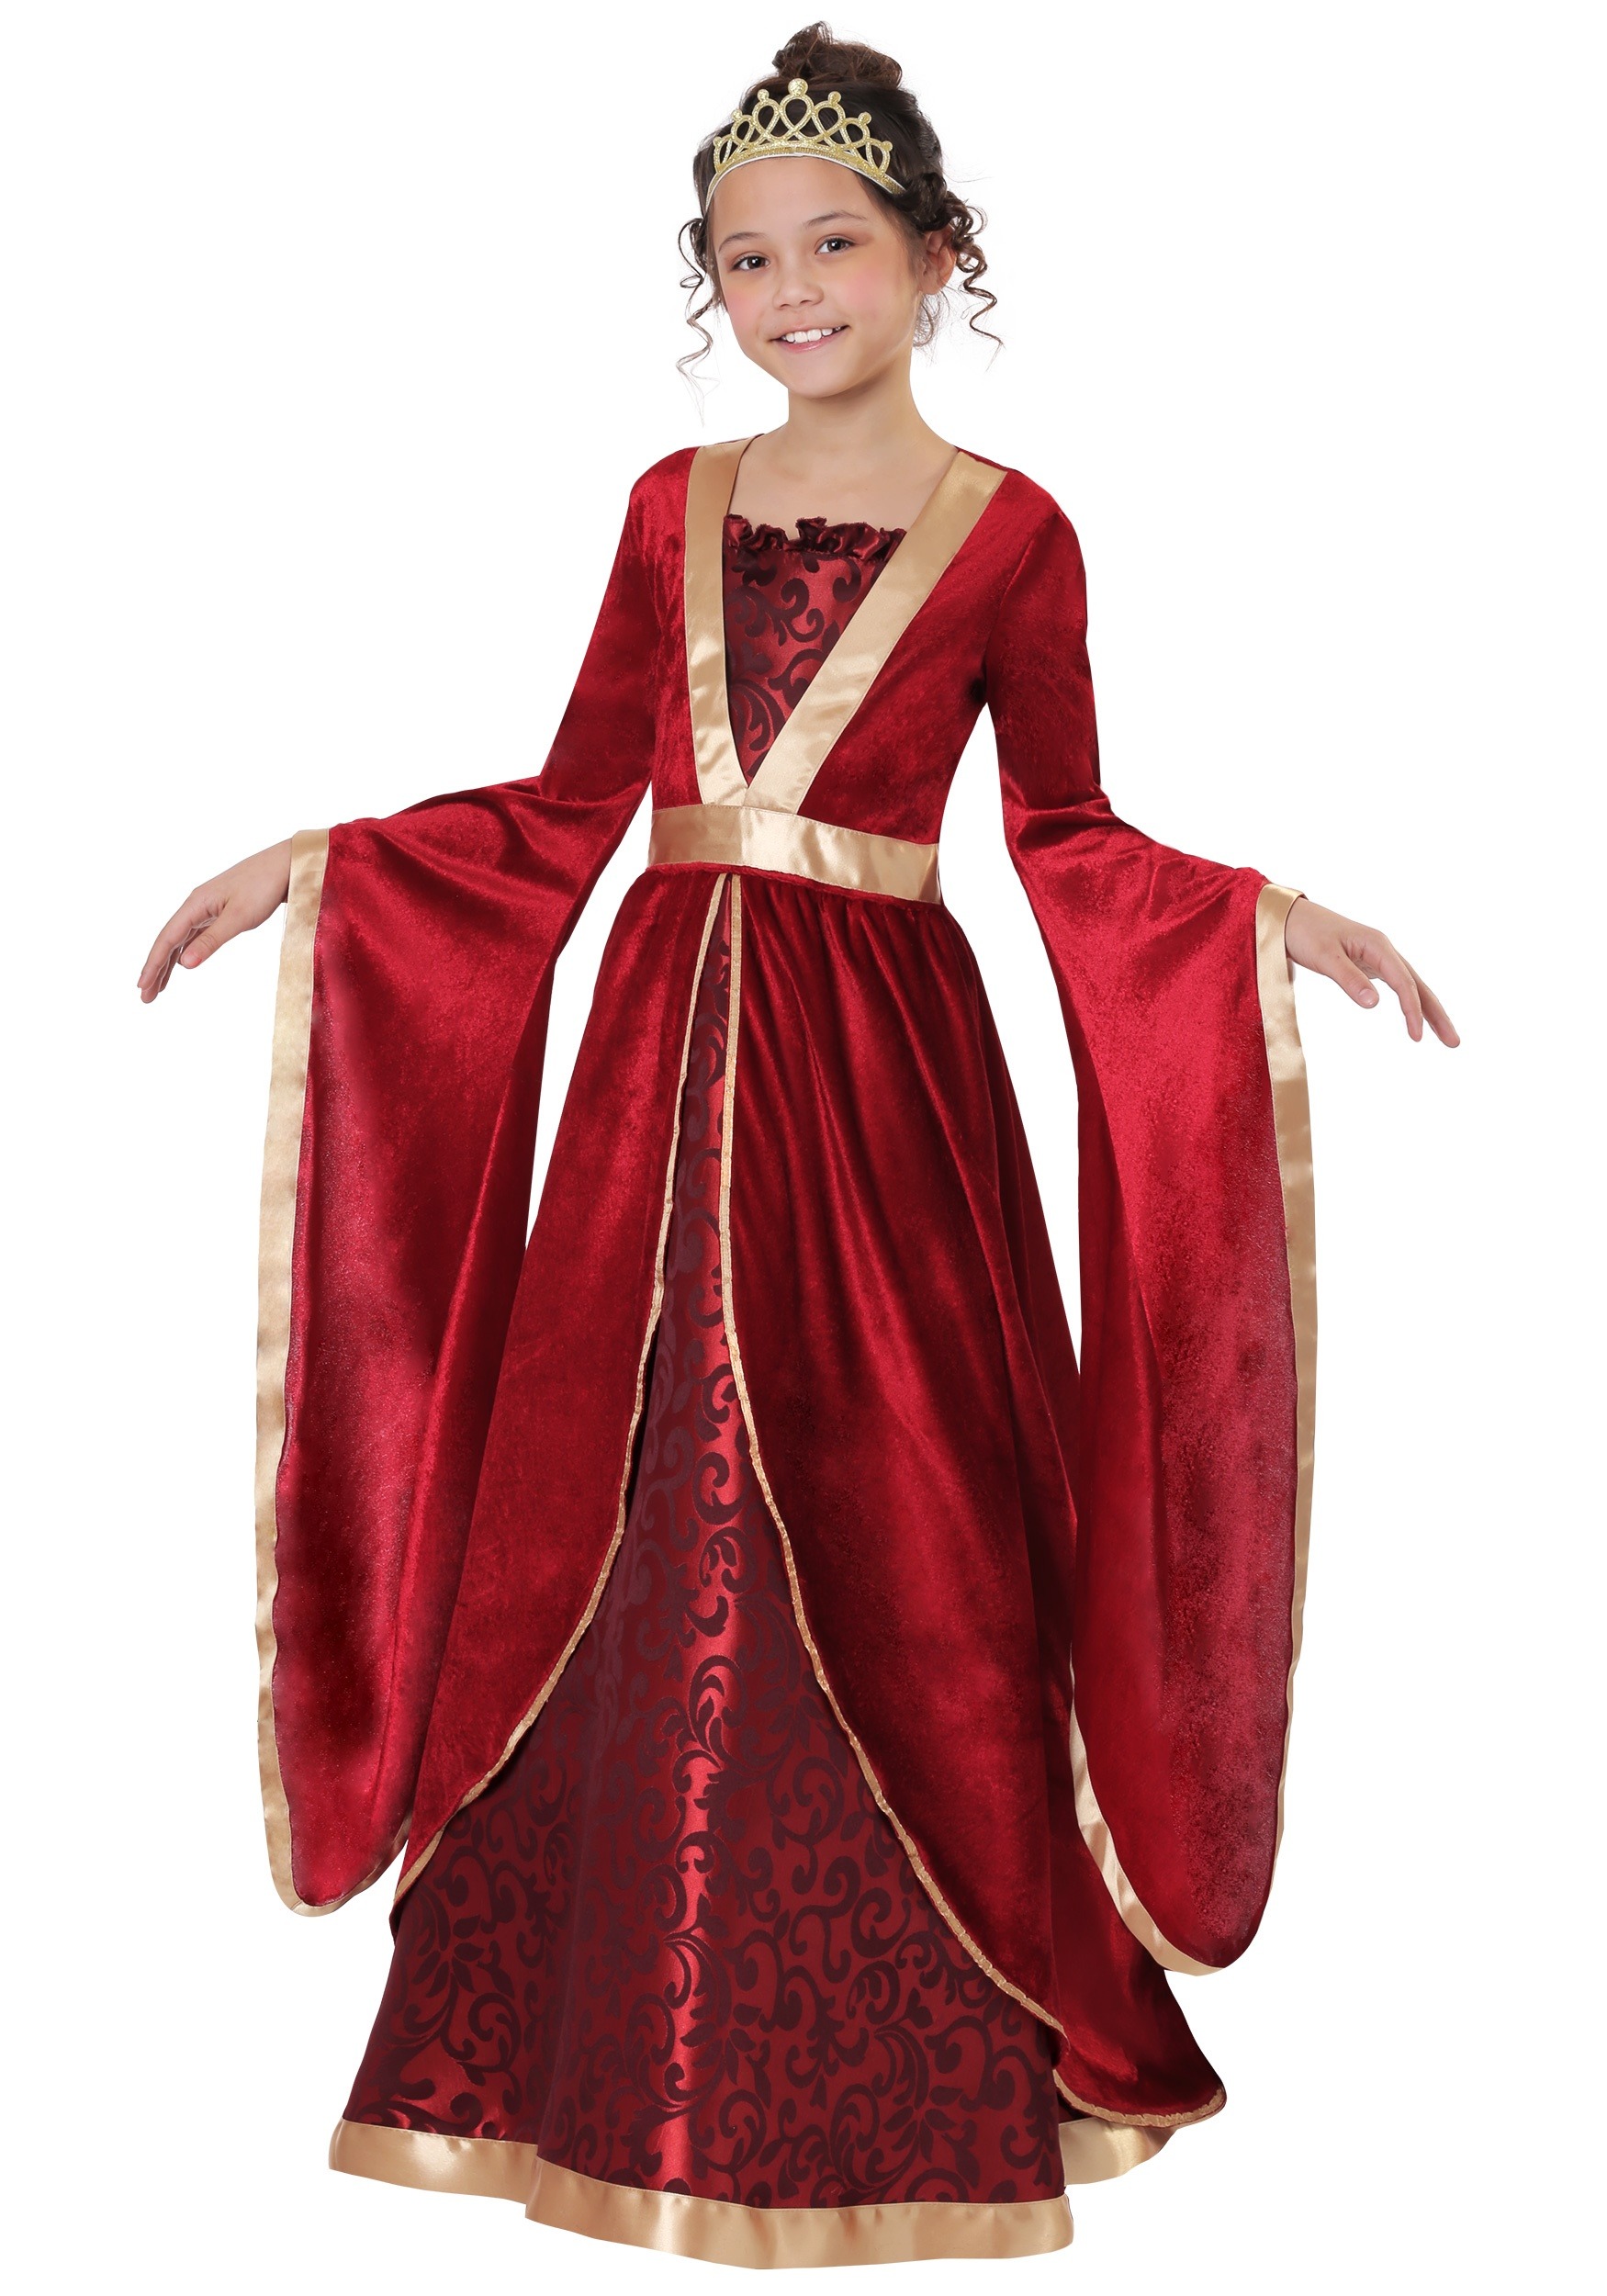 Child Renaissance Maiden Costume Historical Costumes